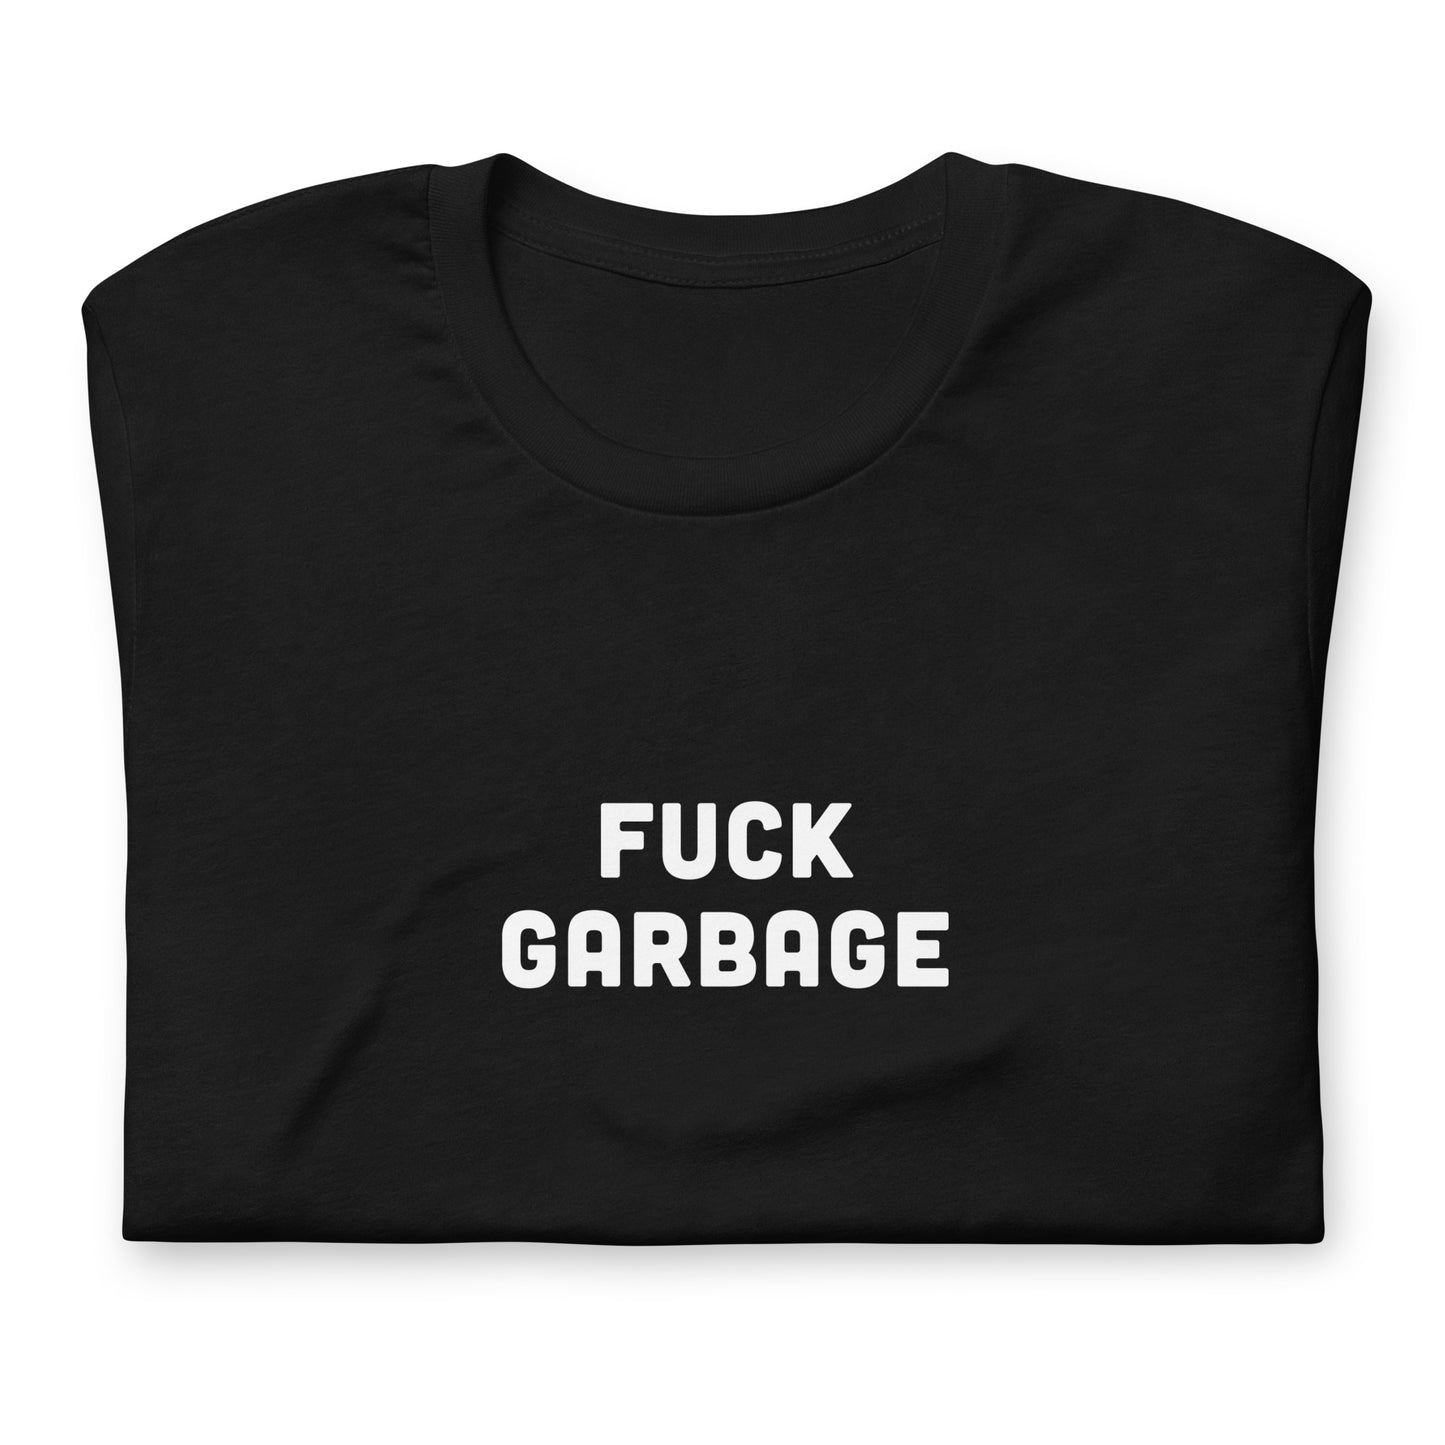 Fuck Garbage T-Shirt Size M Color Black